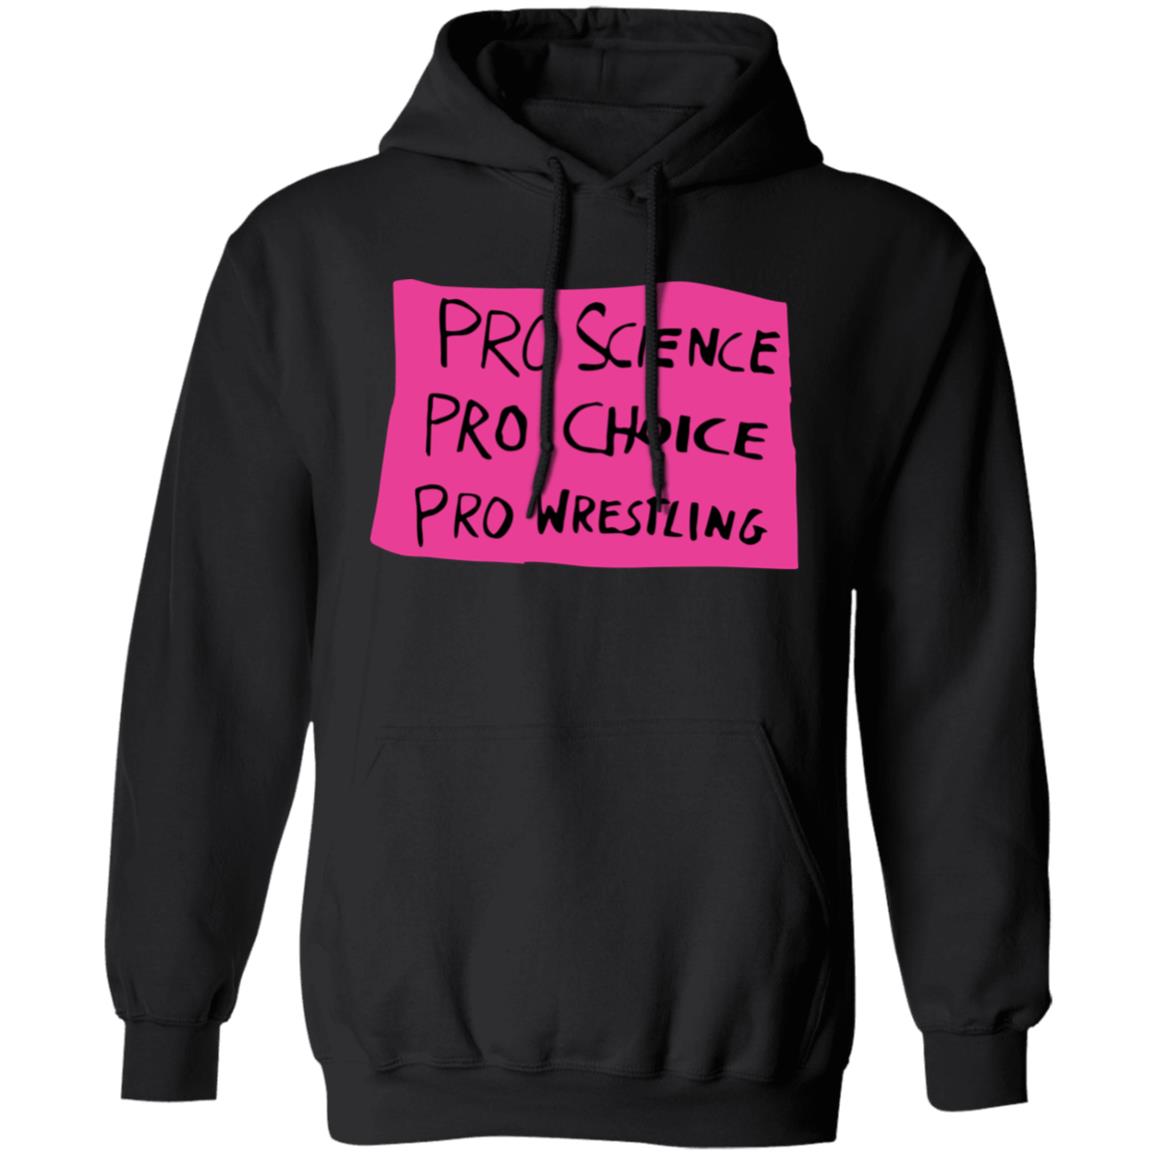 Pro Science Pro Choice Pro Wrestling Shirt 2